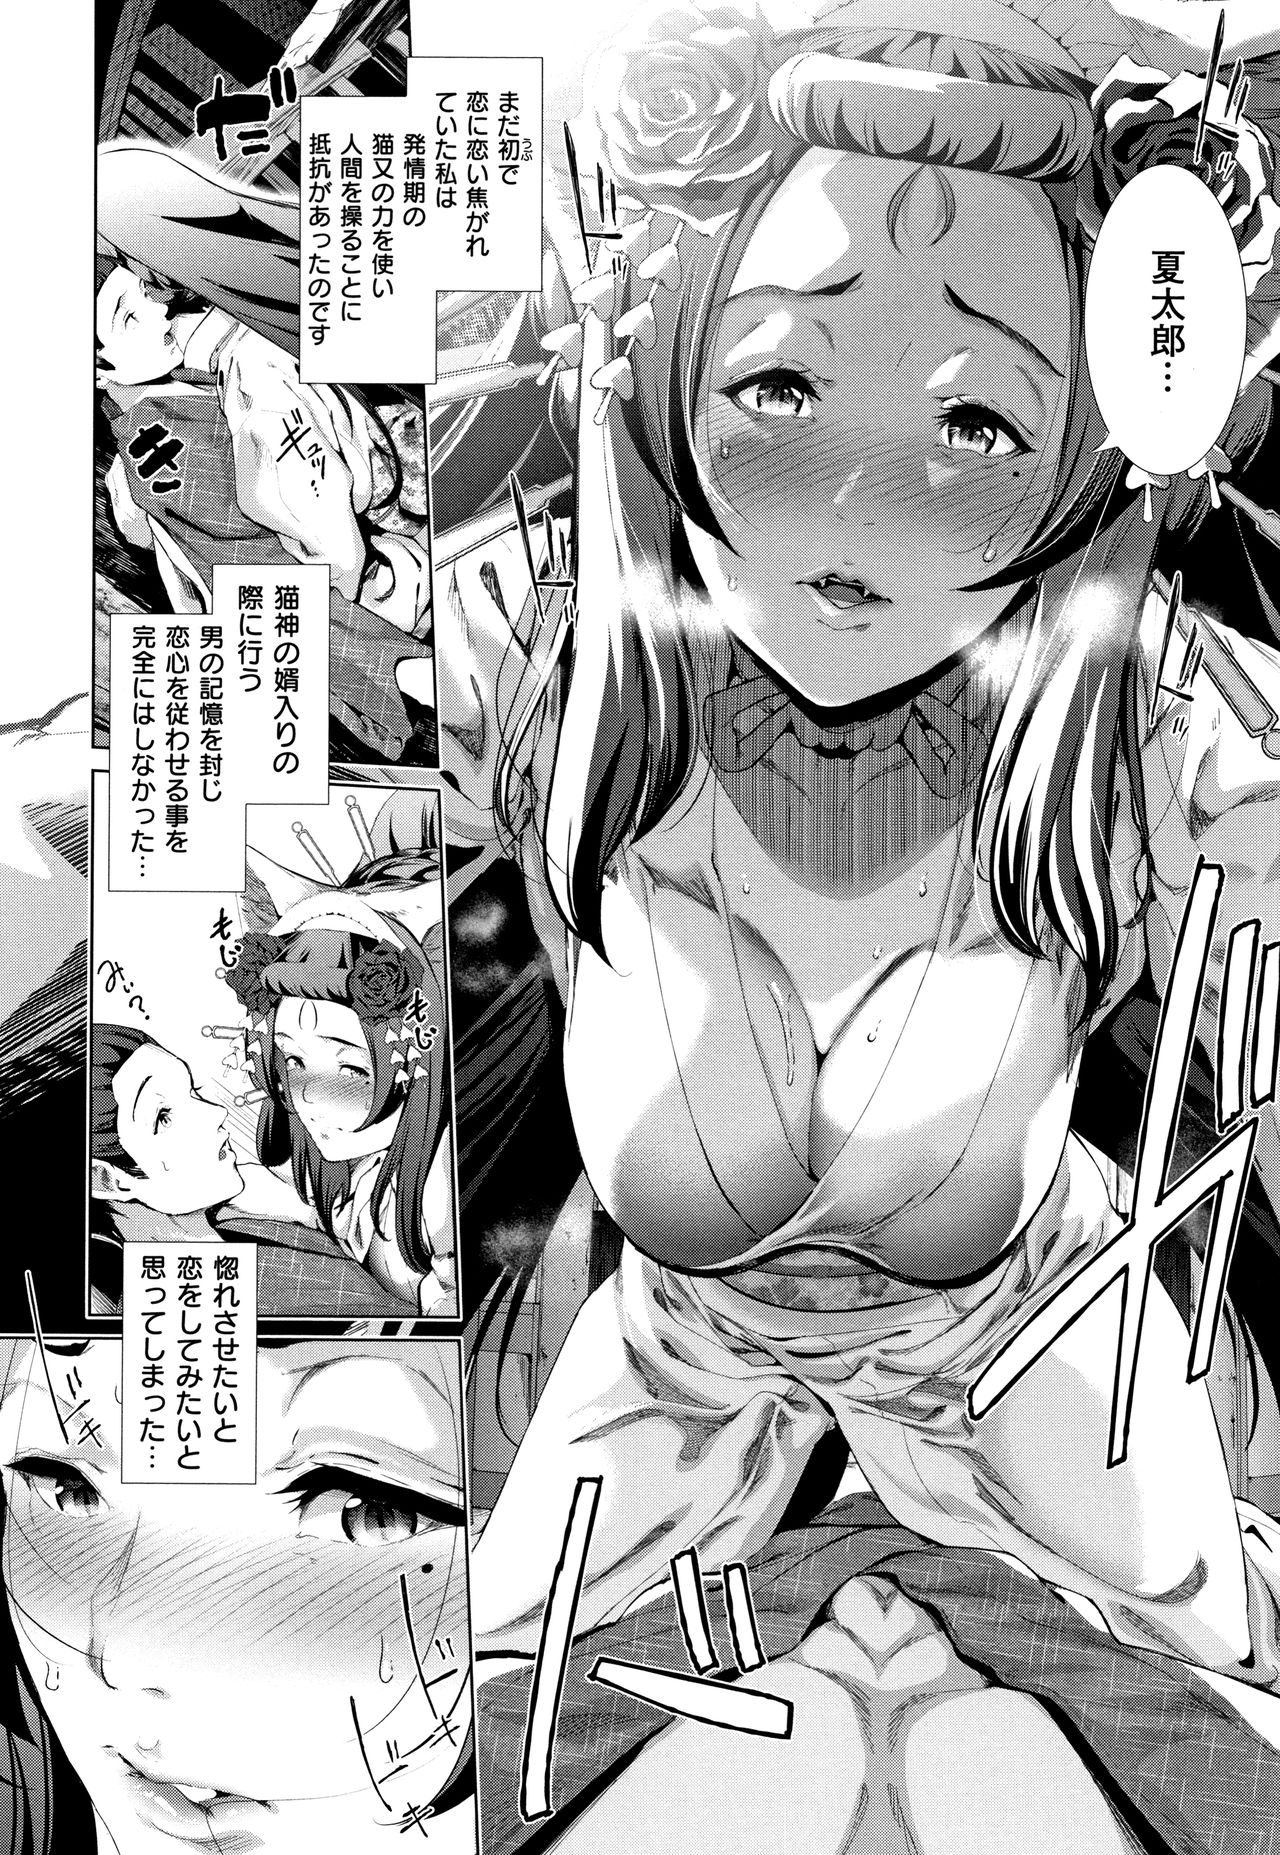 [Suzuhane Suzu] Cos wa Midara na Kamen Shogyouban - Cosplay is a mask [wakes up erotic personality...] 162